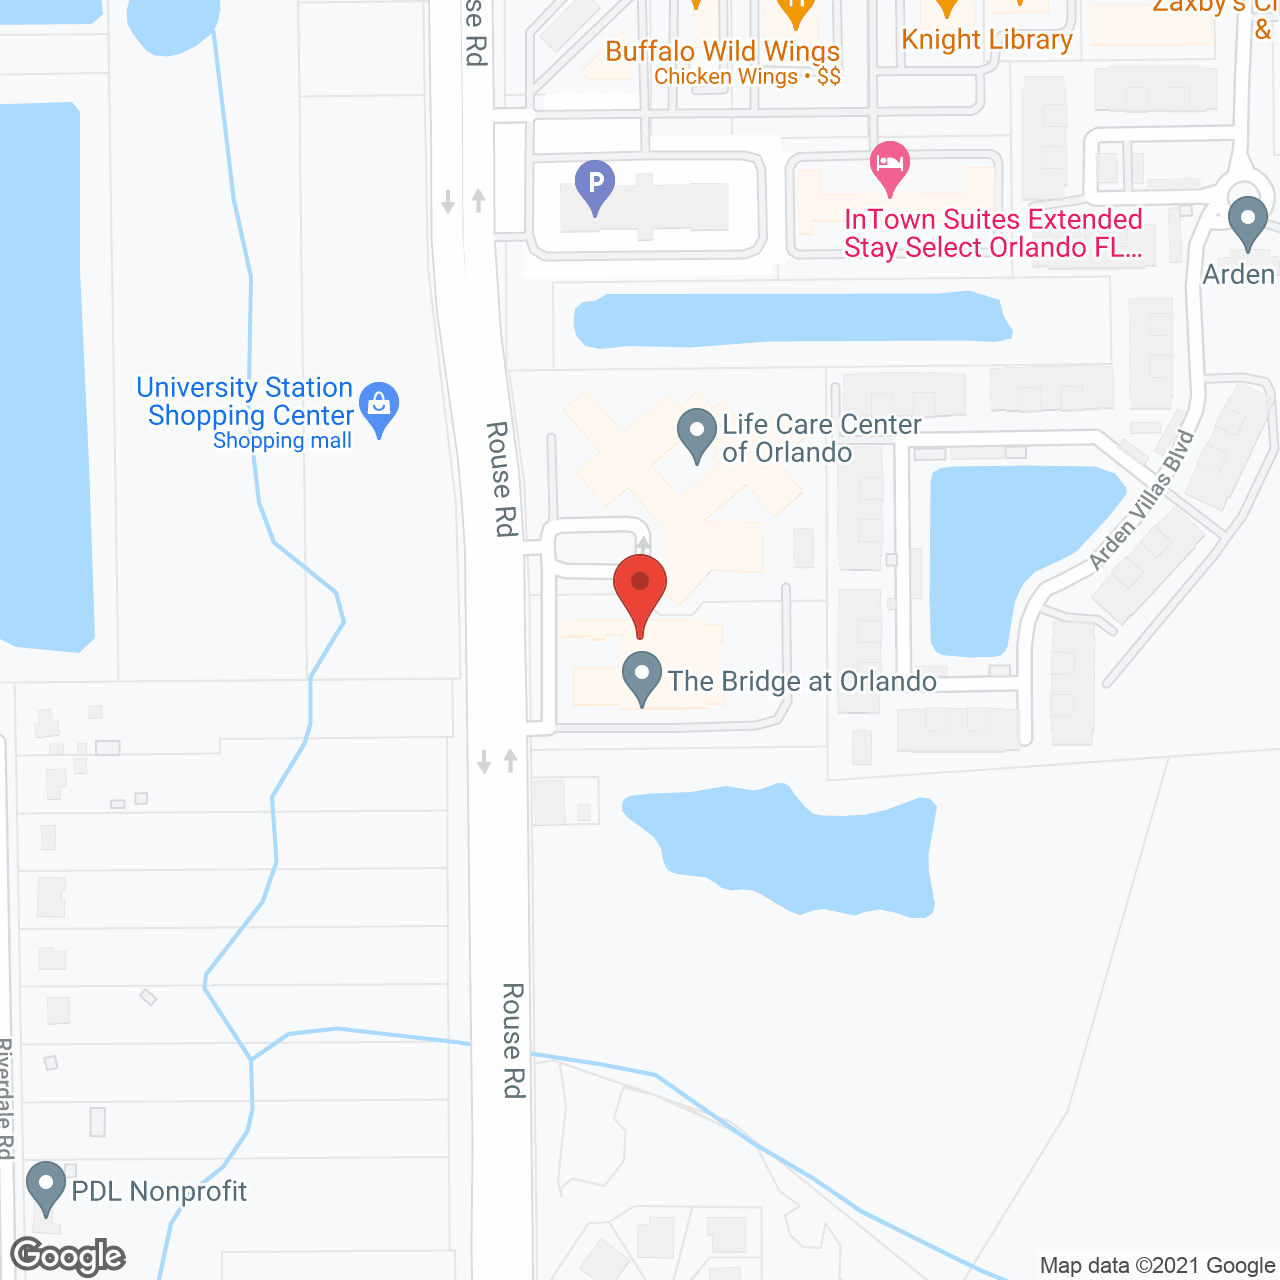 The Bridge at Orlando in google map